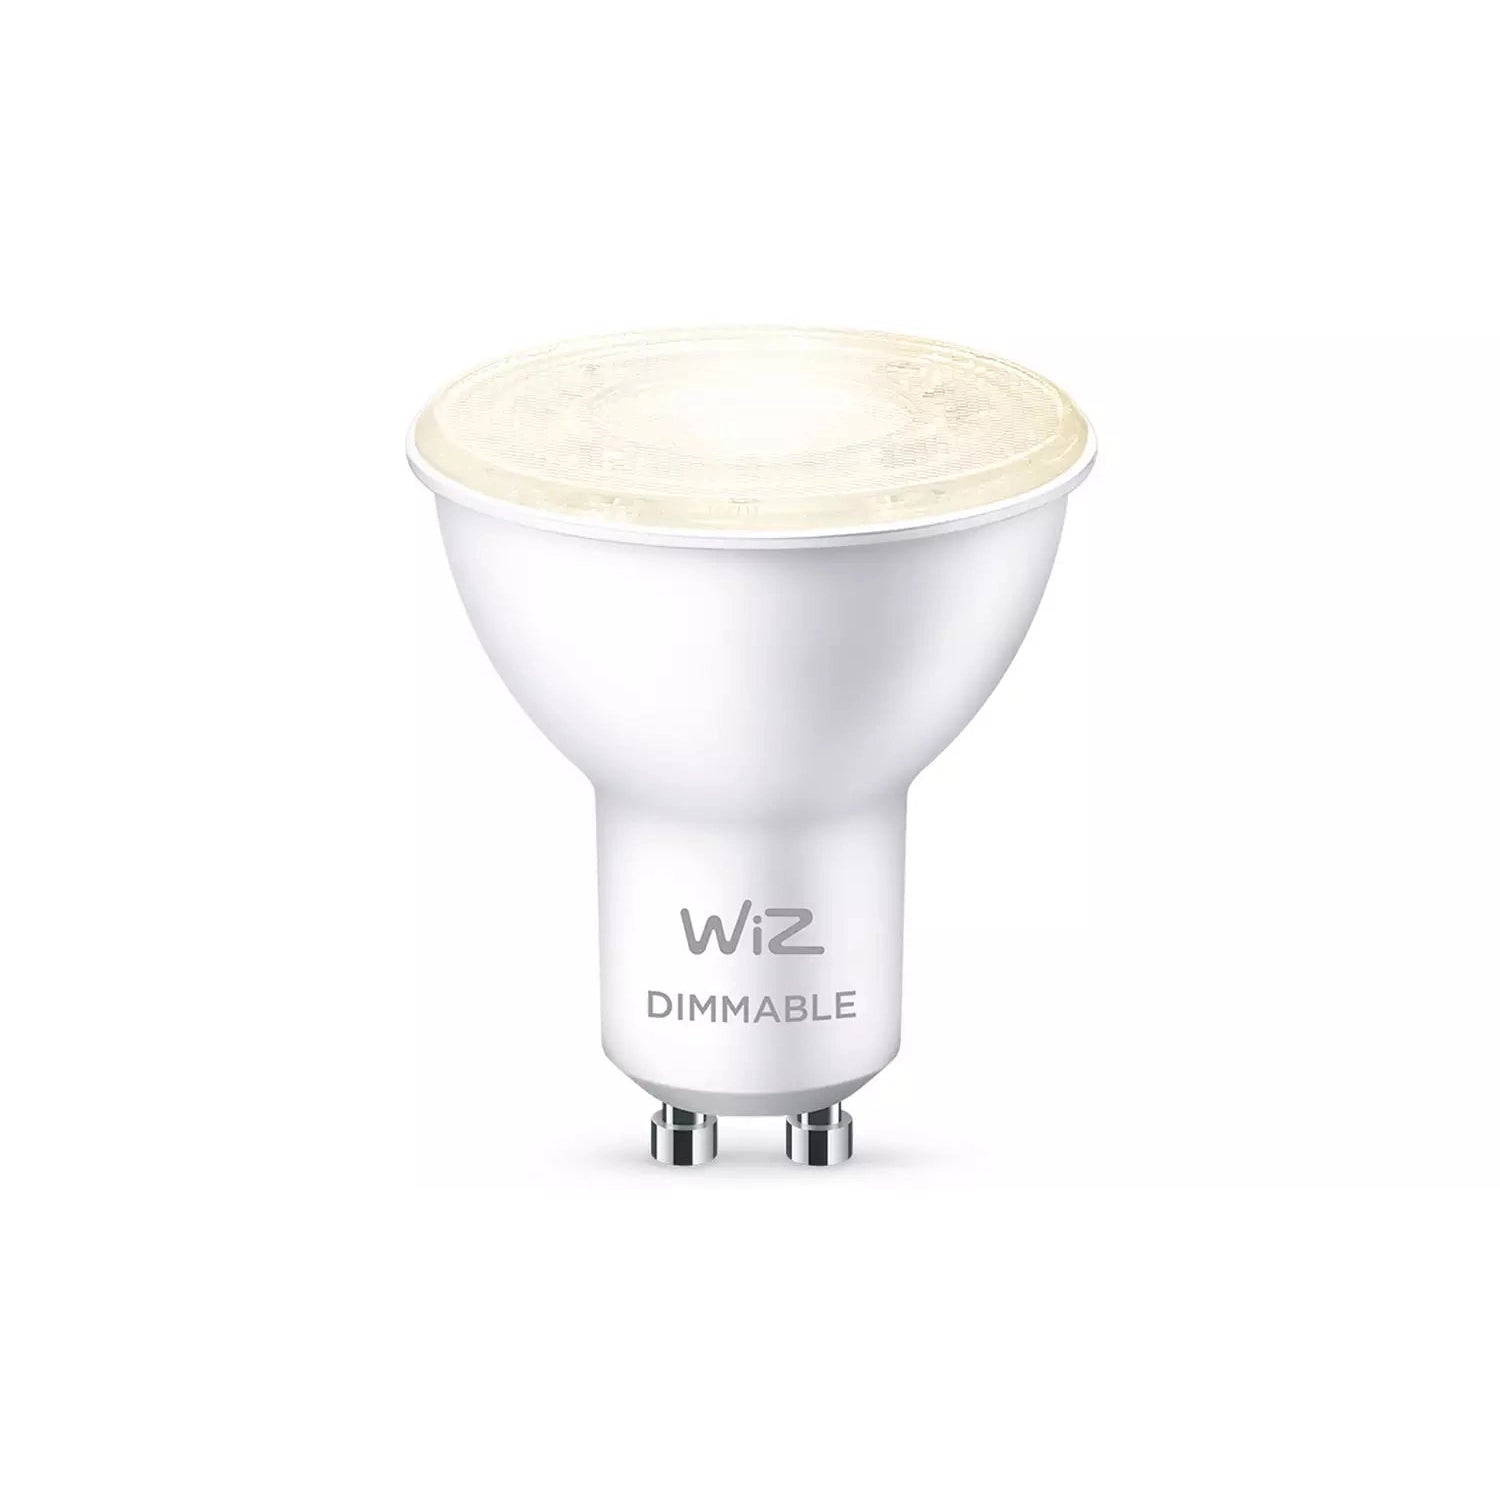 Wiz Wi-Fi Dimmable White GU10 LED Smart Bulb